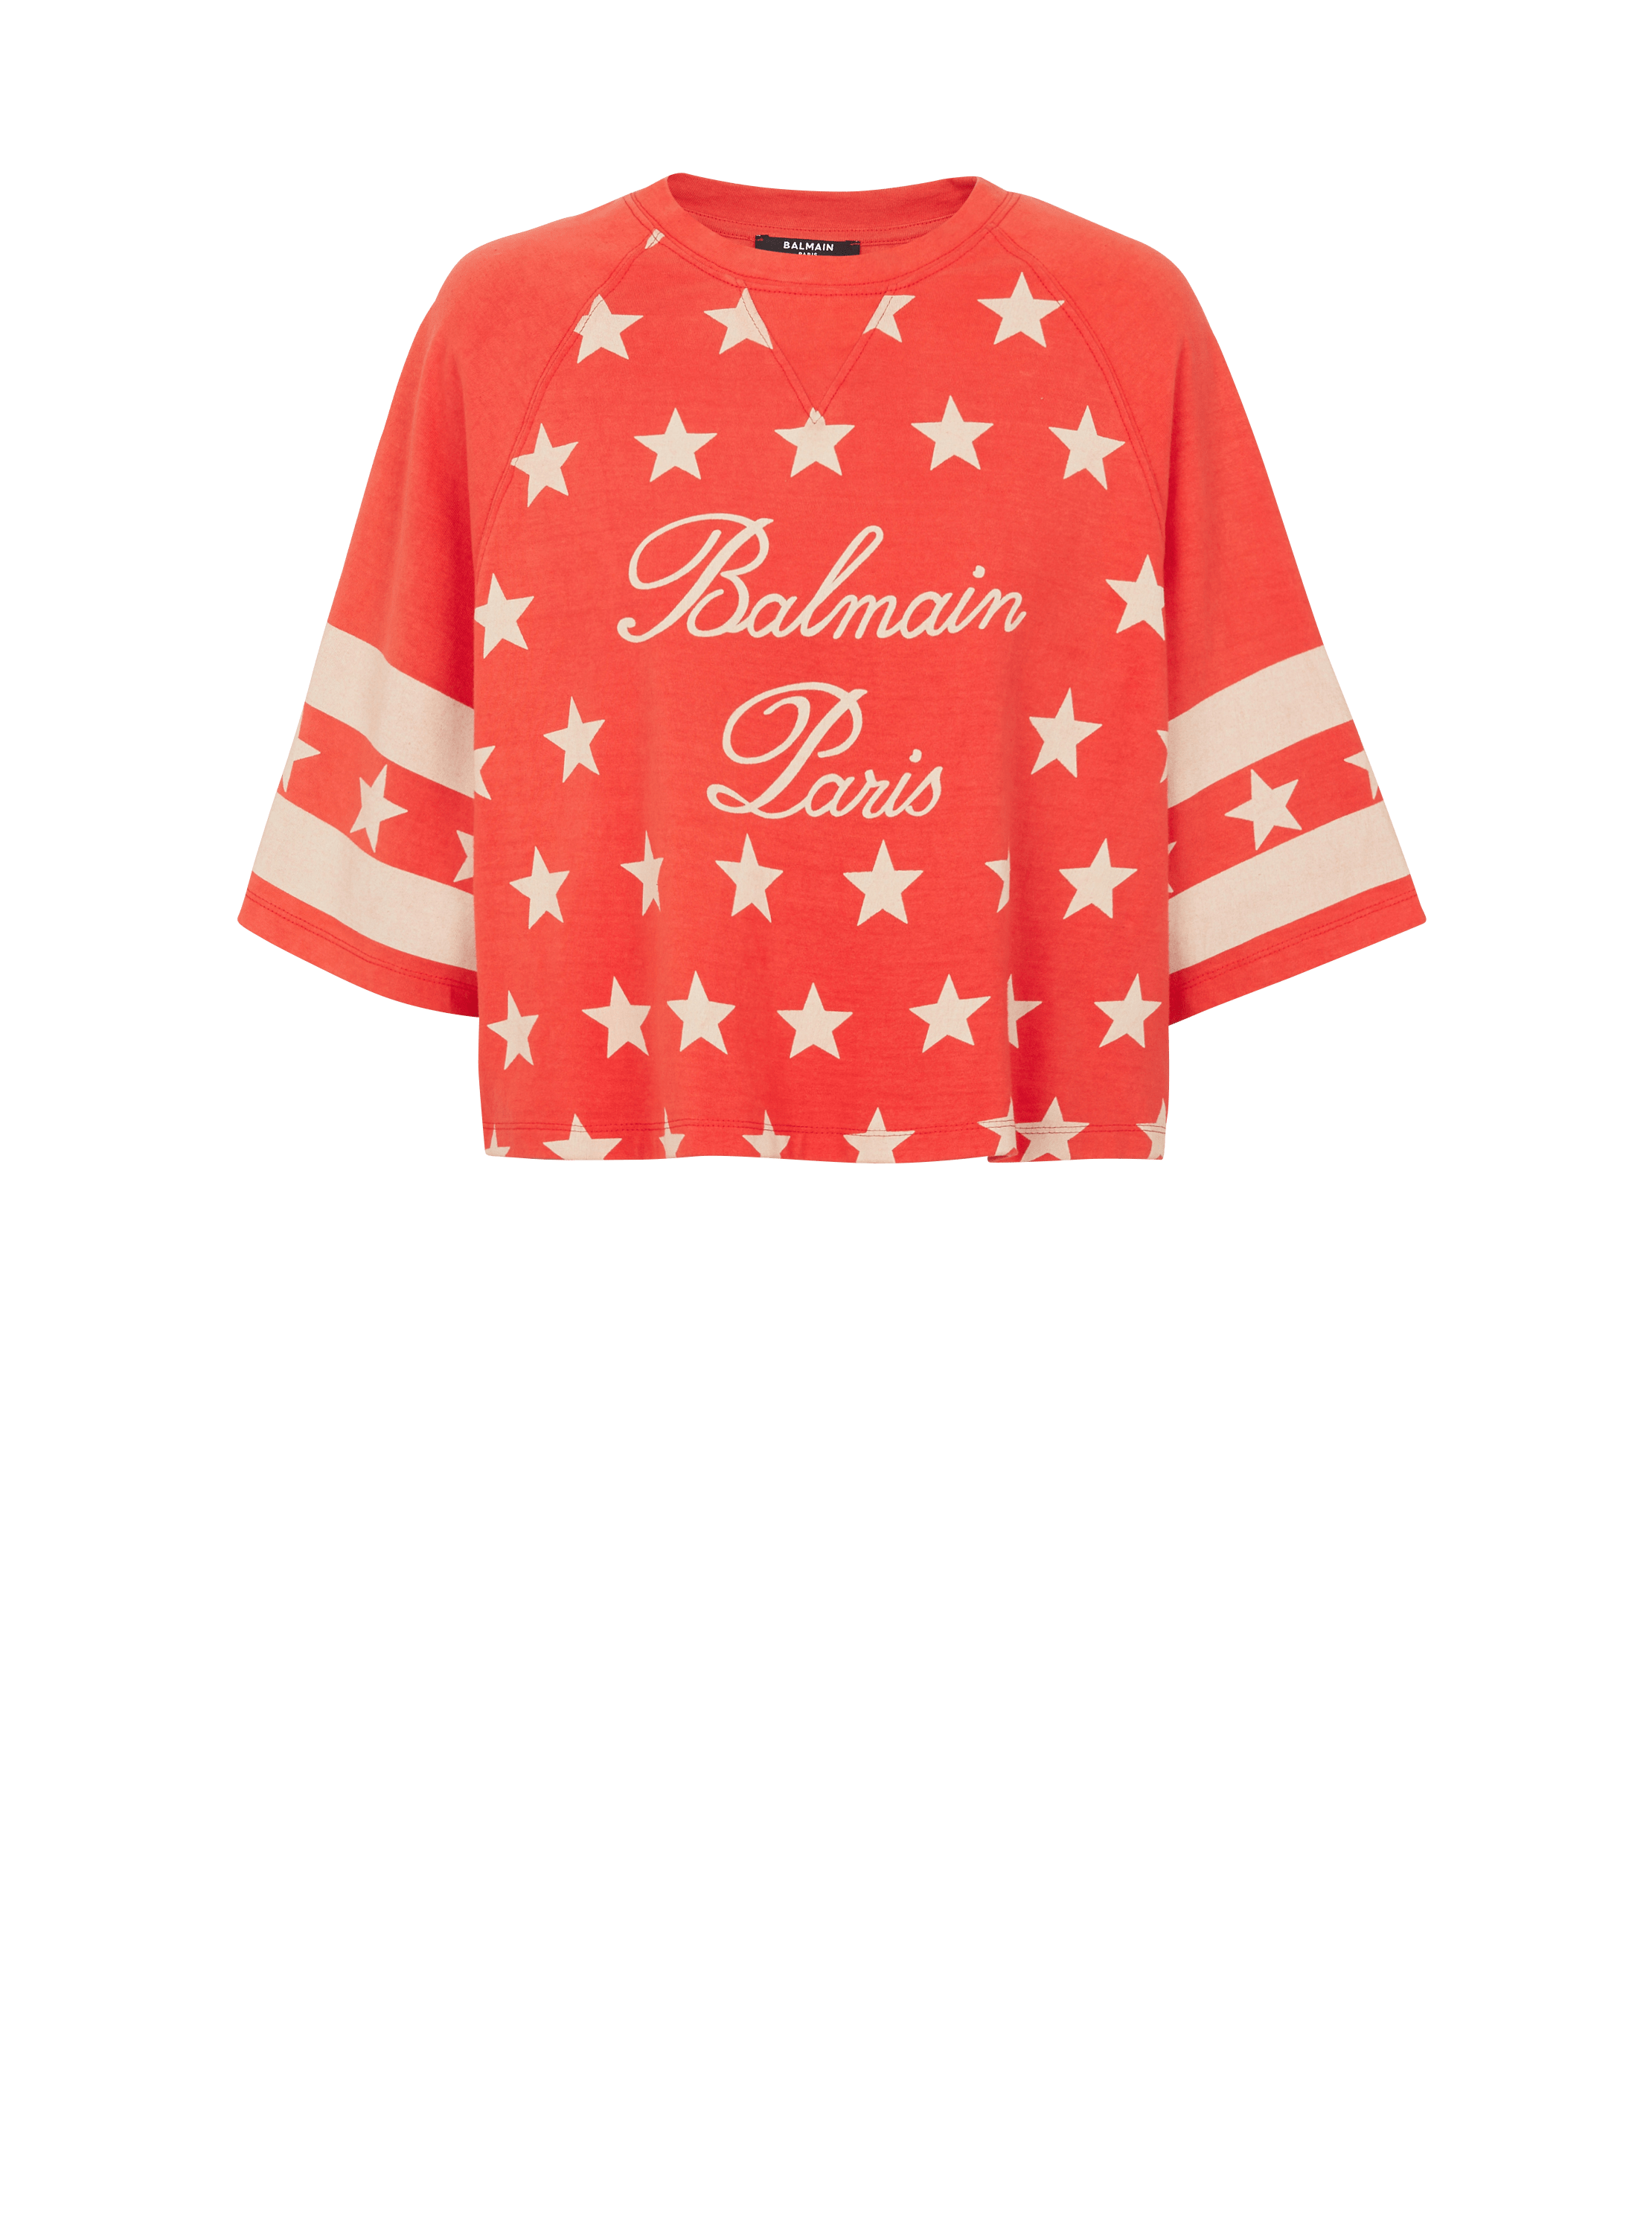 Balmain Signature T-Shirt mit Sternen, rot, hi-res